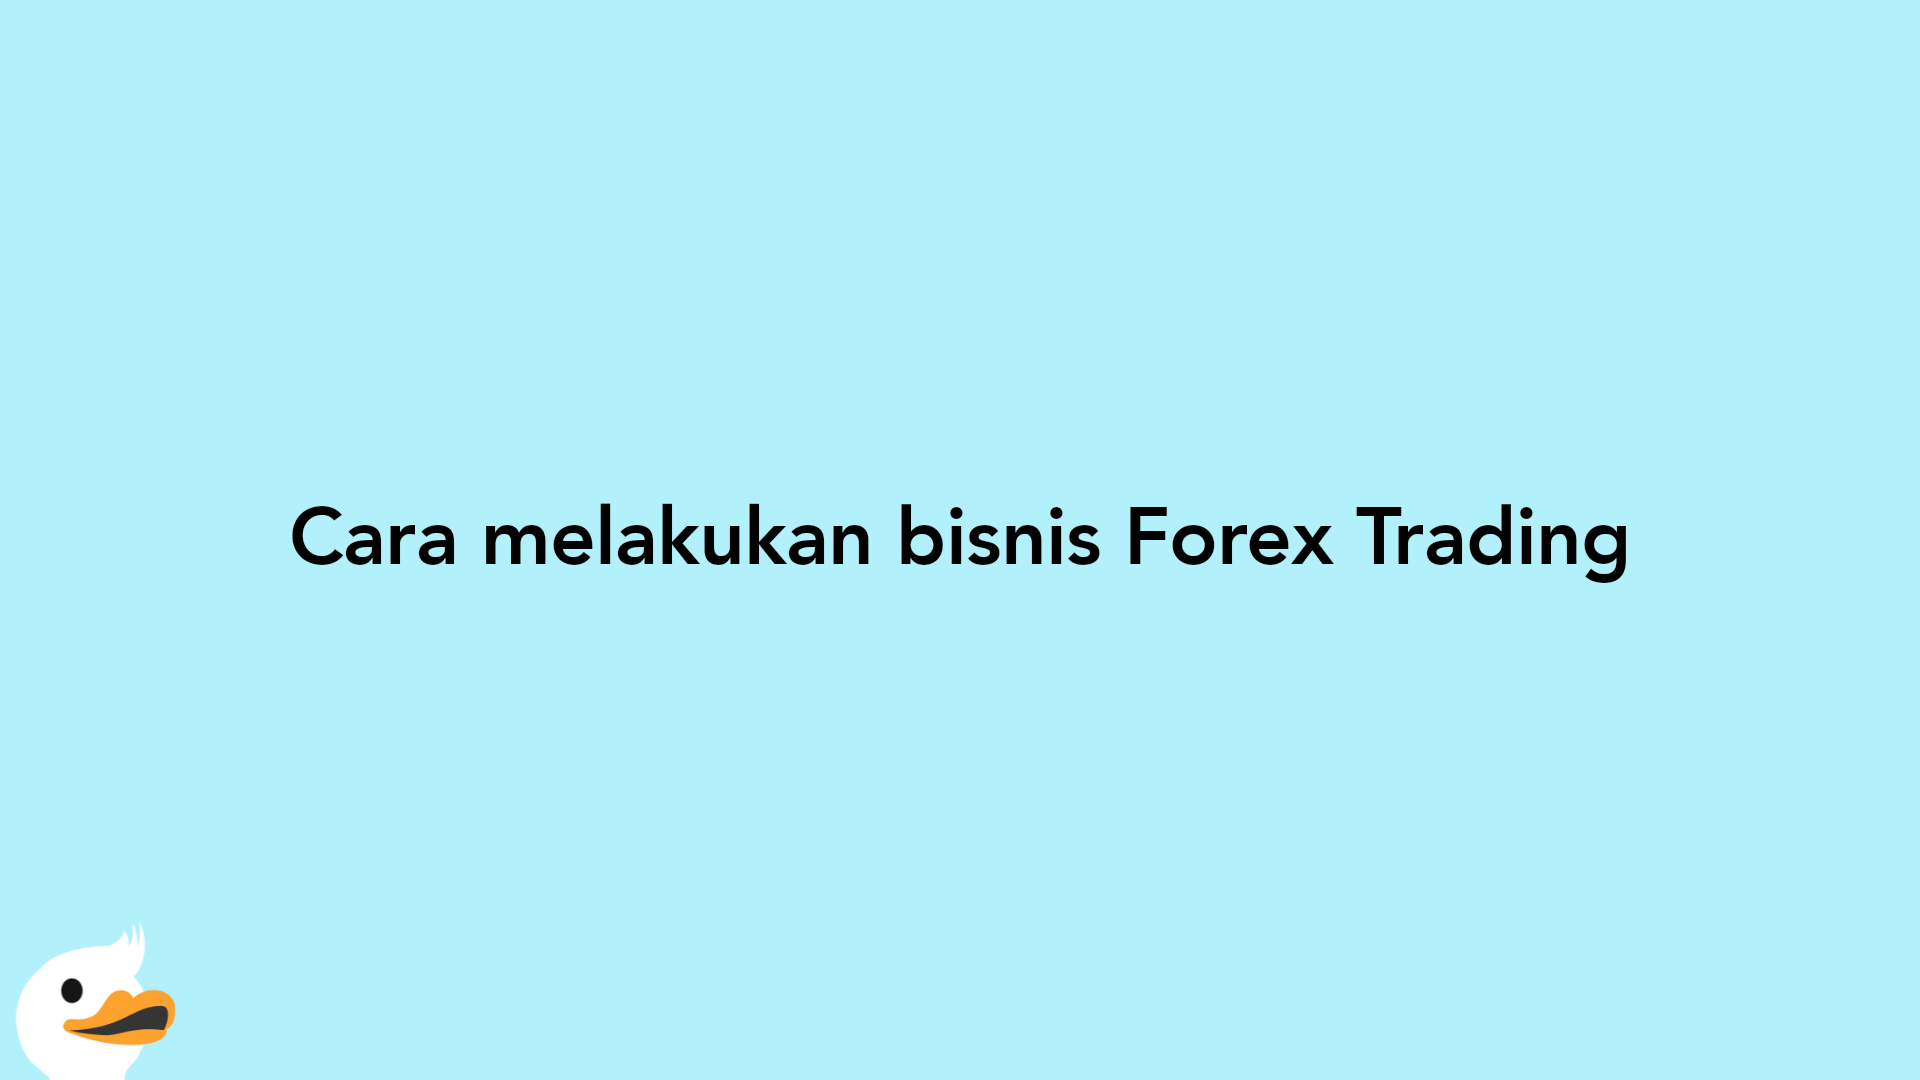 Cara melakukan bisnis Forex Trading